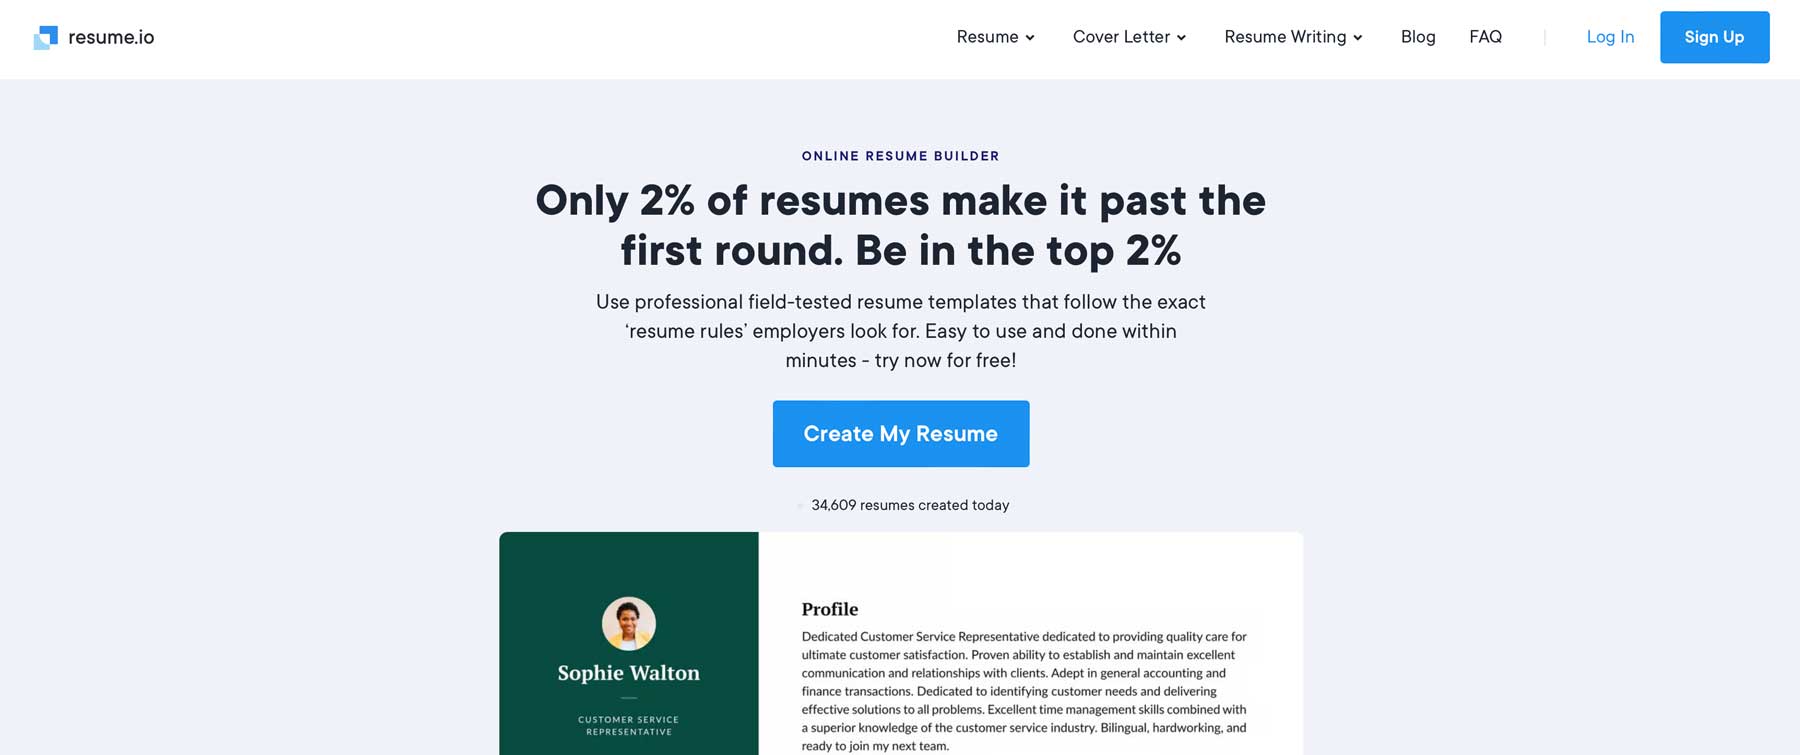 Resume.io best AI tools for career